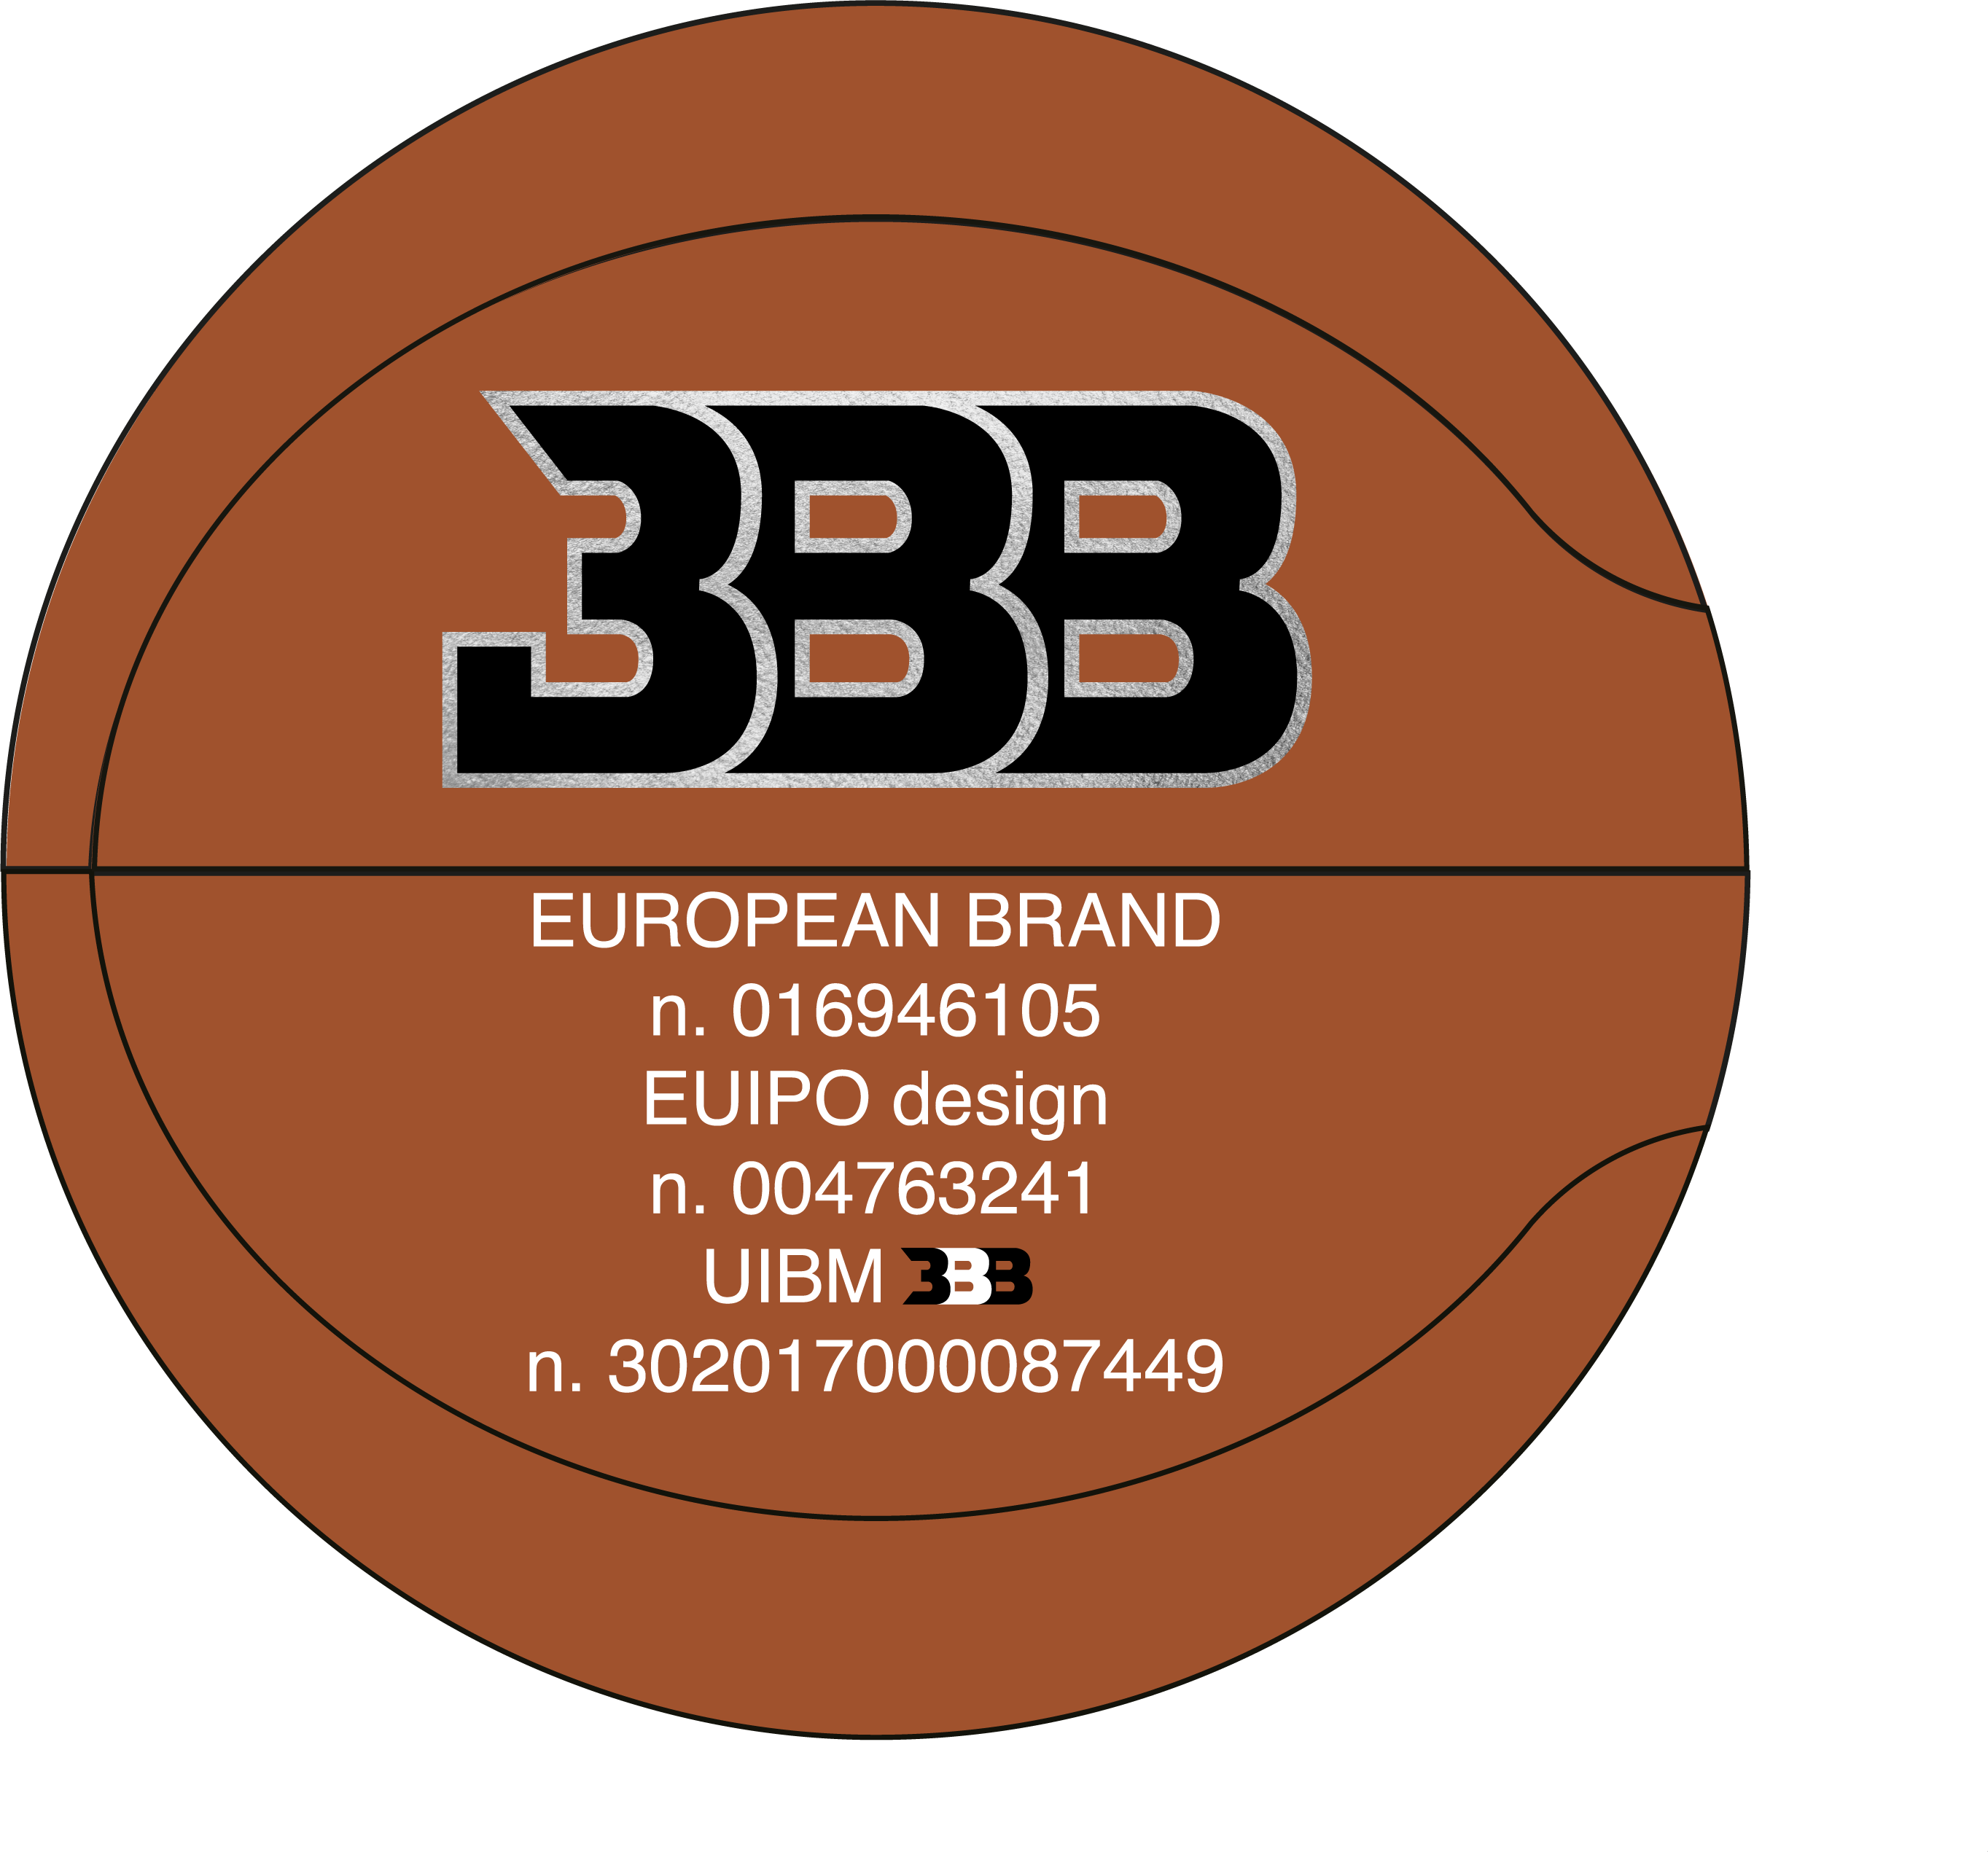 Download Big Baller Brand European Brand N Big Baller Brand Png Image With No Background Pngkey Com